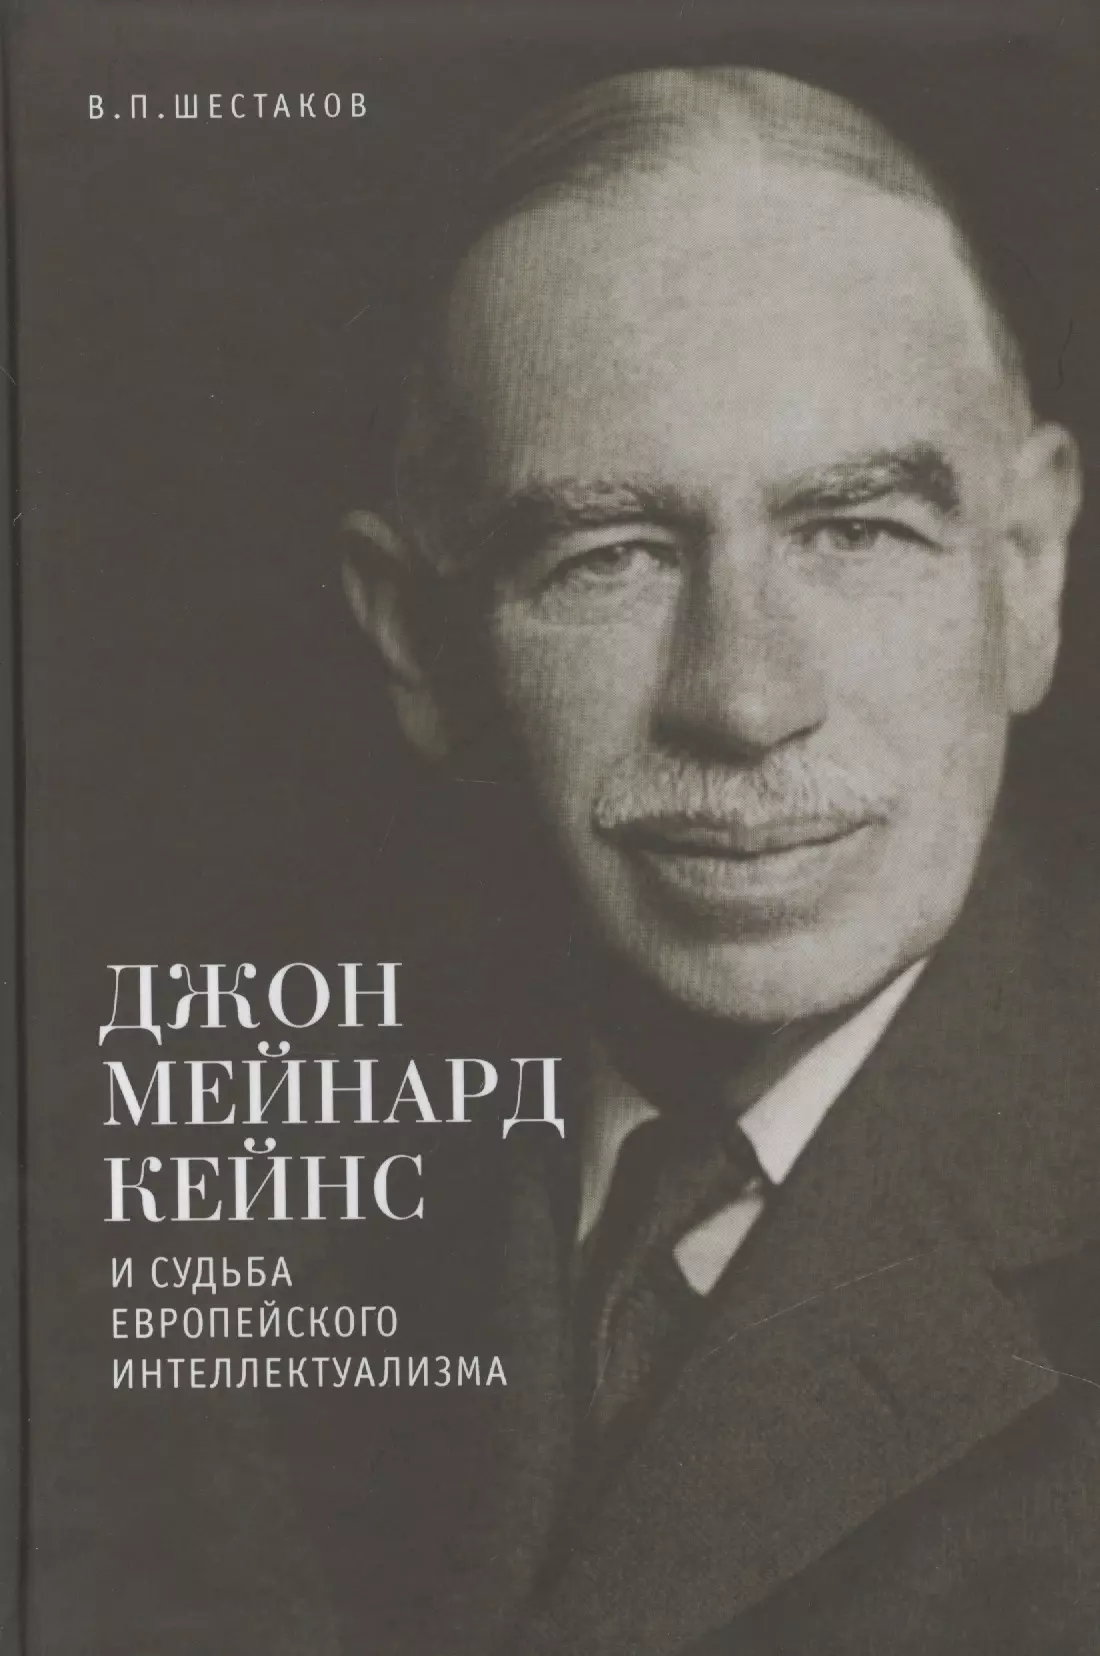 Шестаков Вячеслав Павлович - Джон Мейнард Кейнс и судьба европейского интеллектуализма.